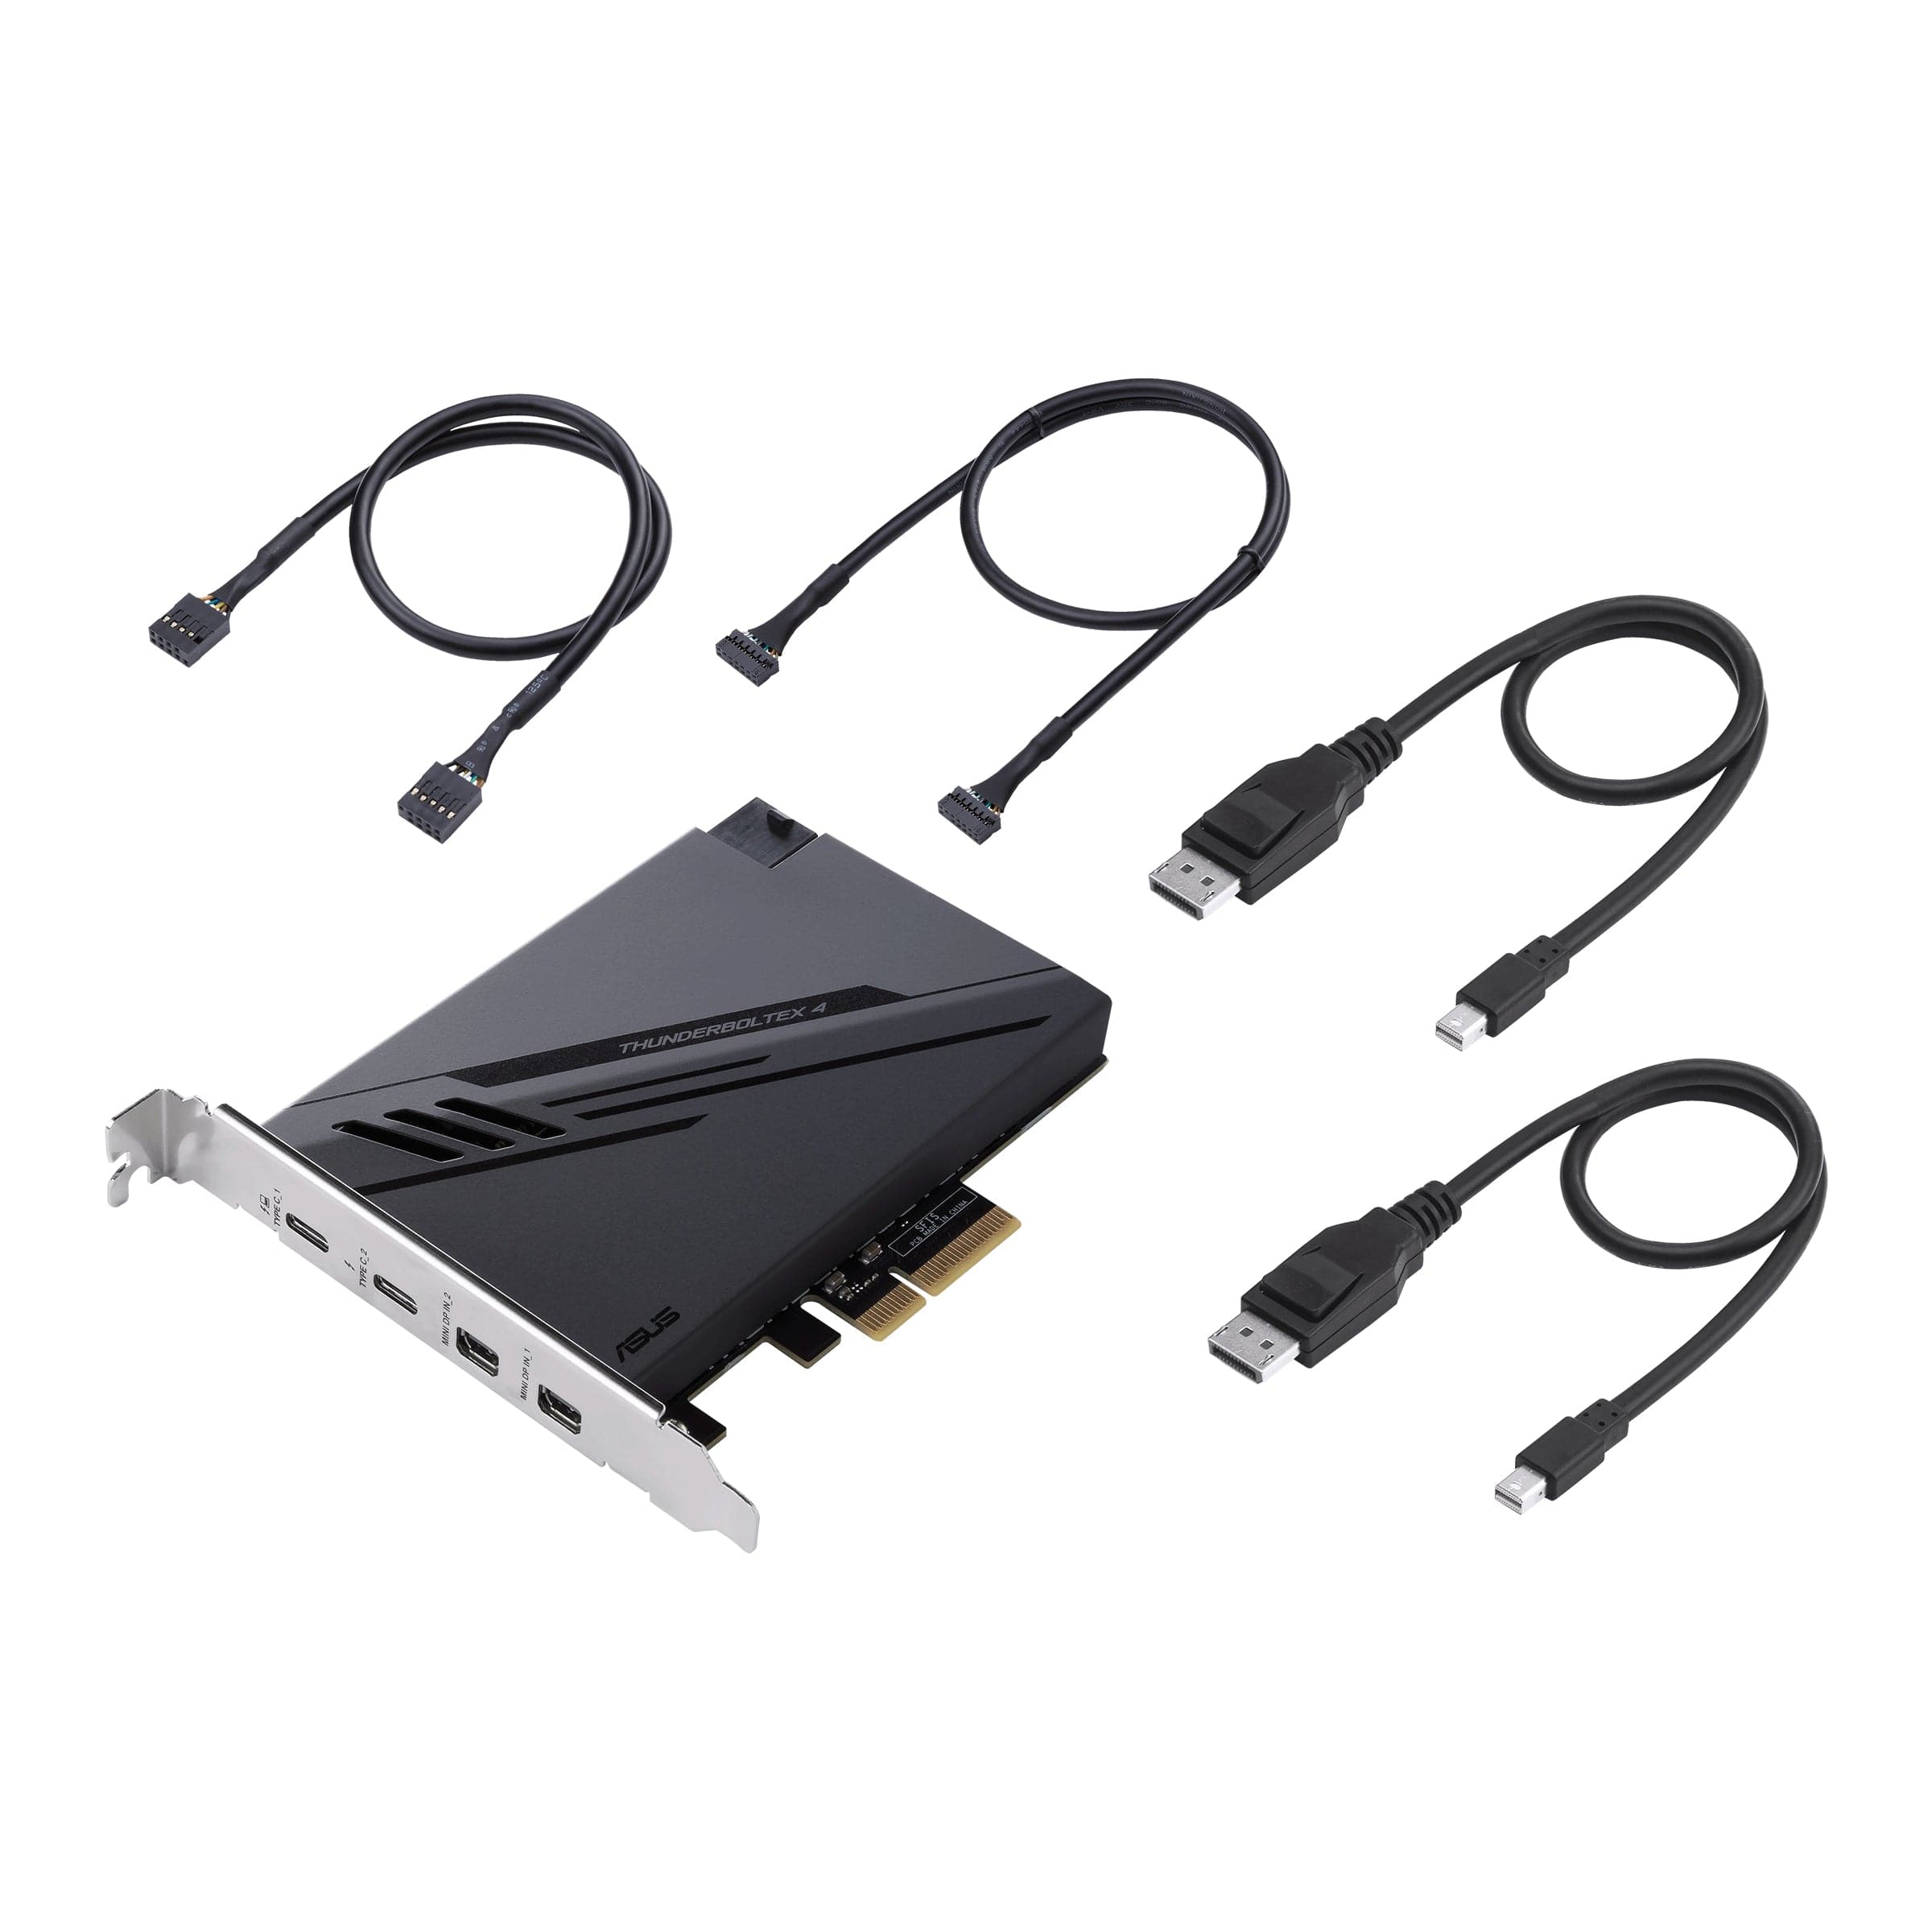 ASUS ThunderboltEX 4 PCIe Expansion card - 2 x Thunderbolt 4 (USB-C, 40 Gbps, 100W QC), 2 x miniDP Asus